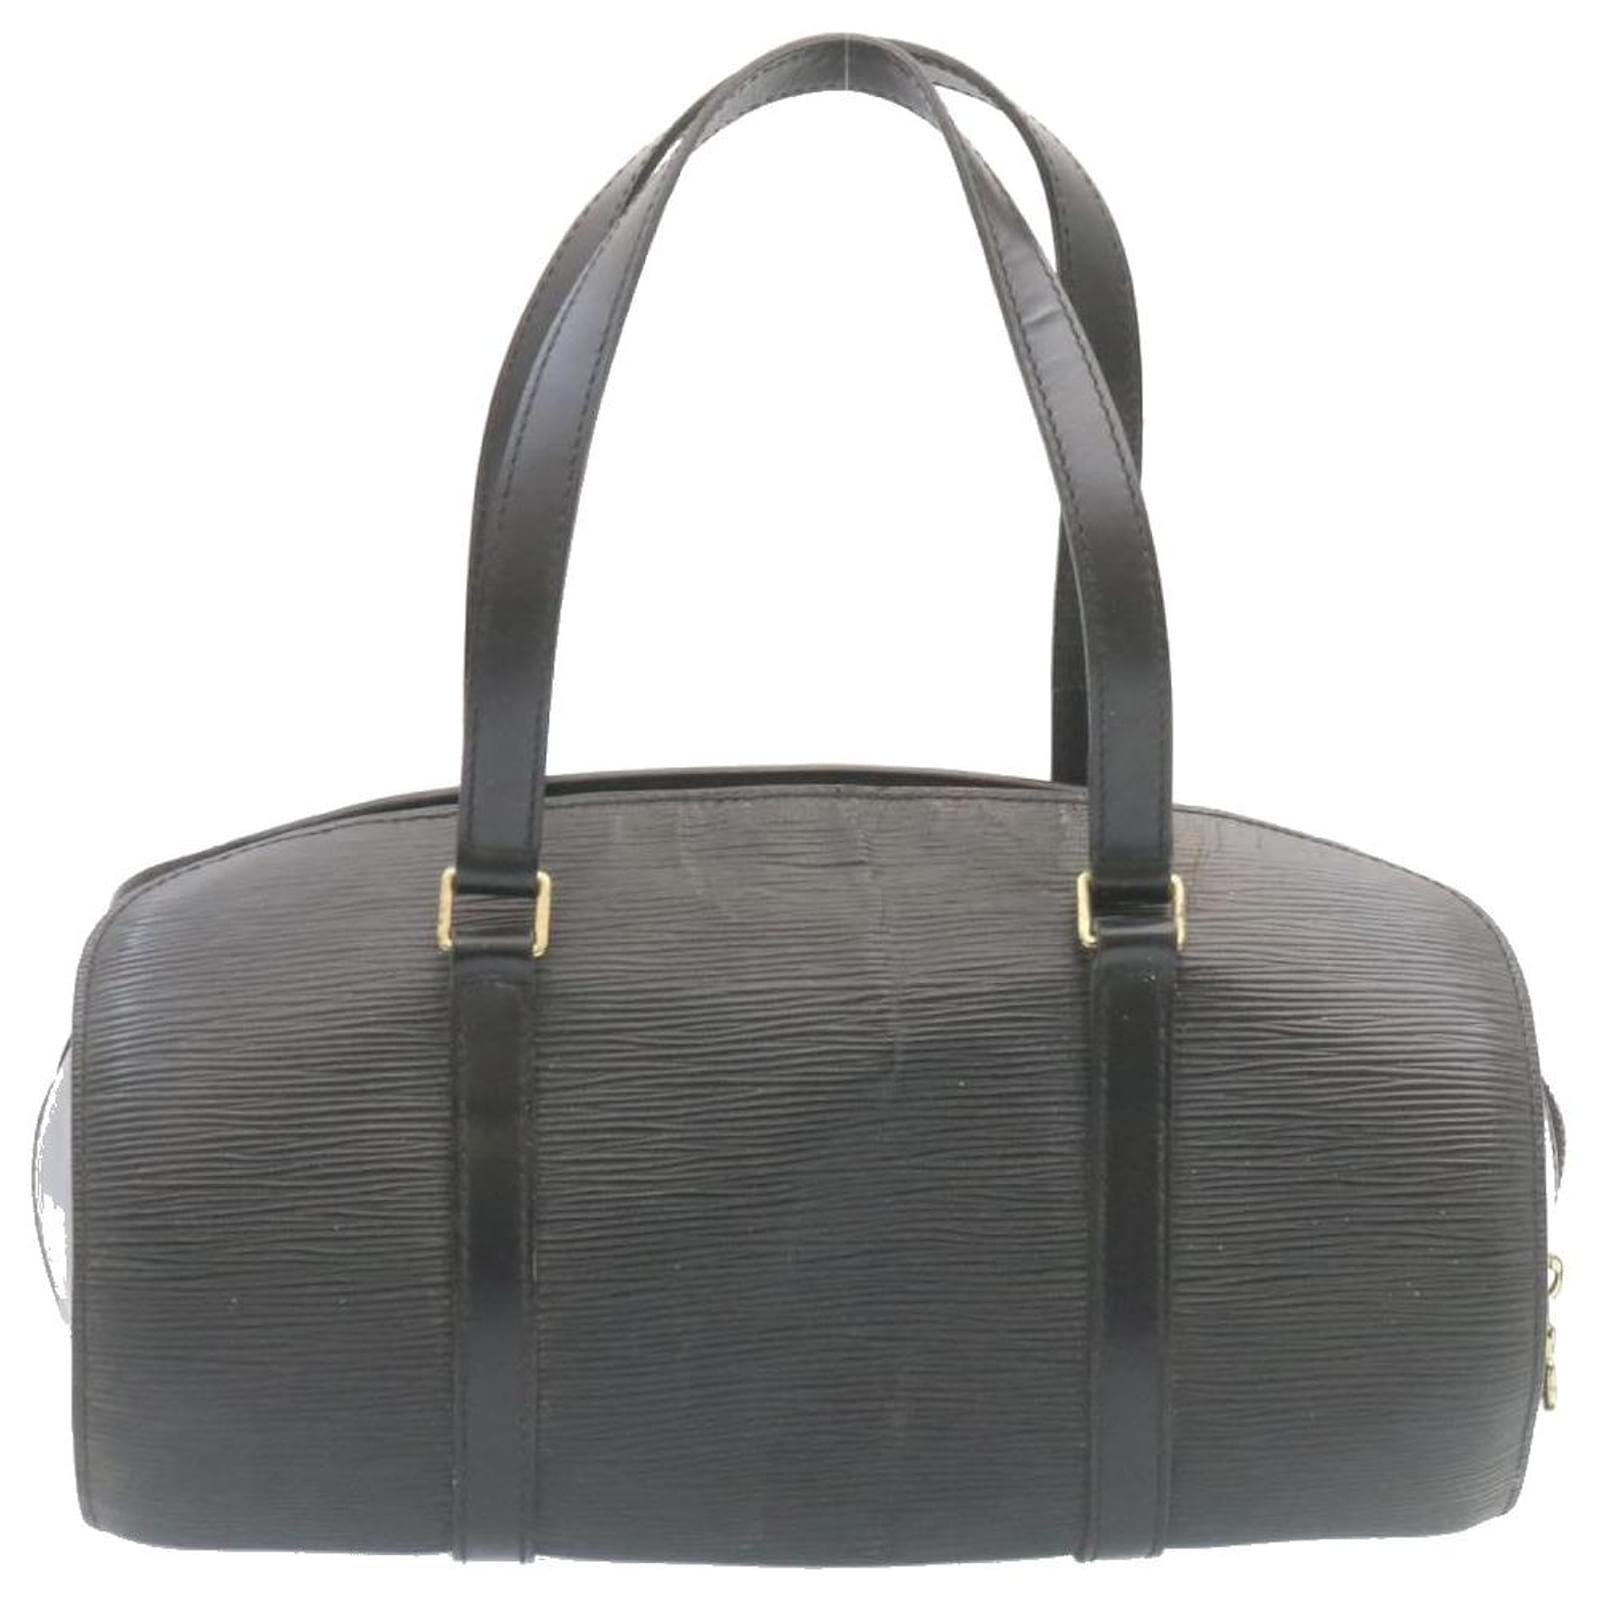 Auth Louis Vuitton Epi Soufflot M52222 Women's Handbag Noir